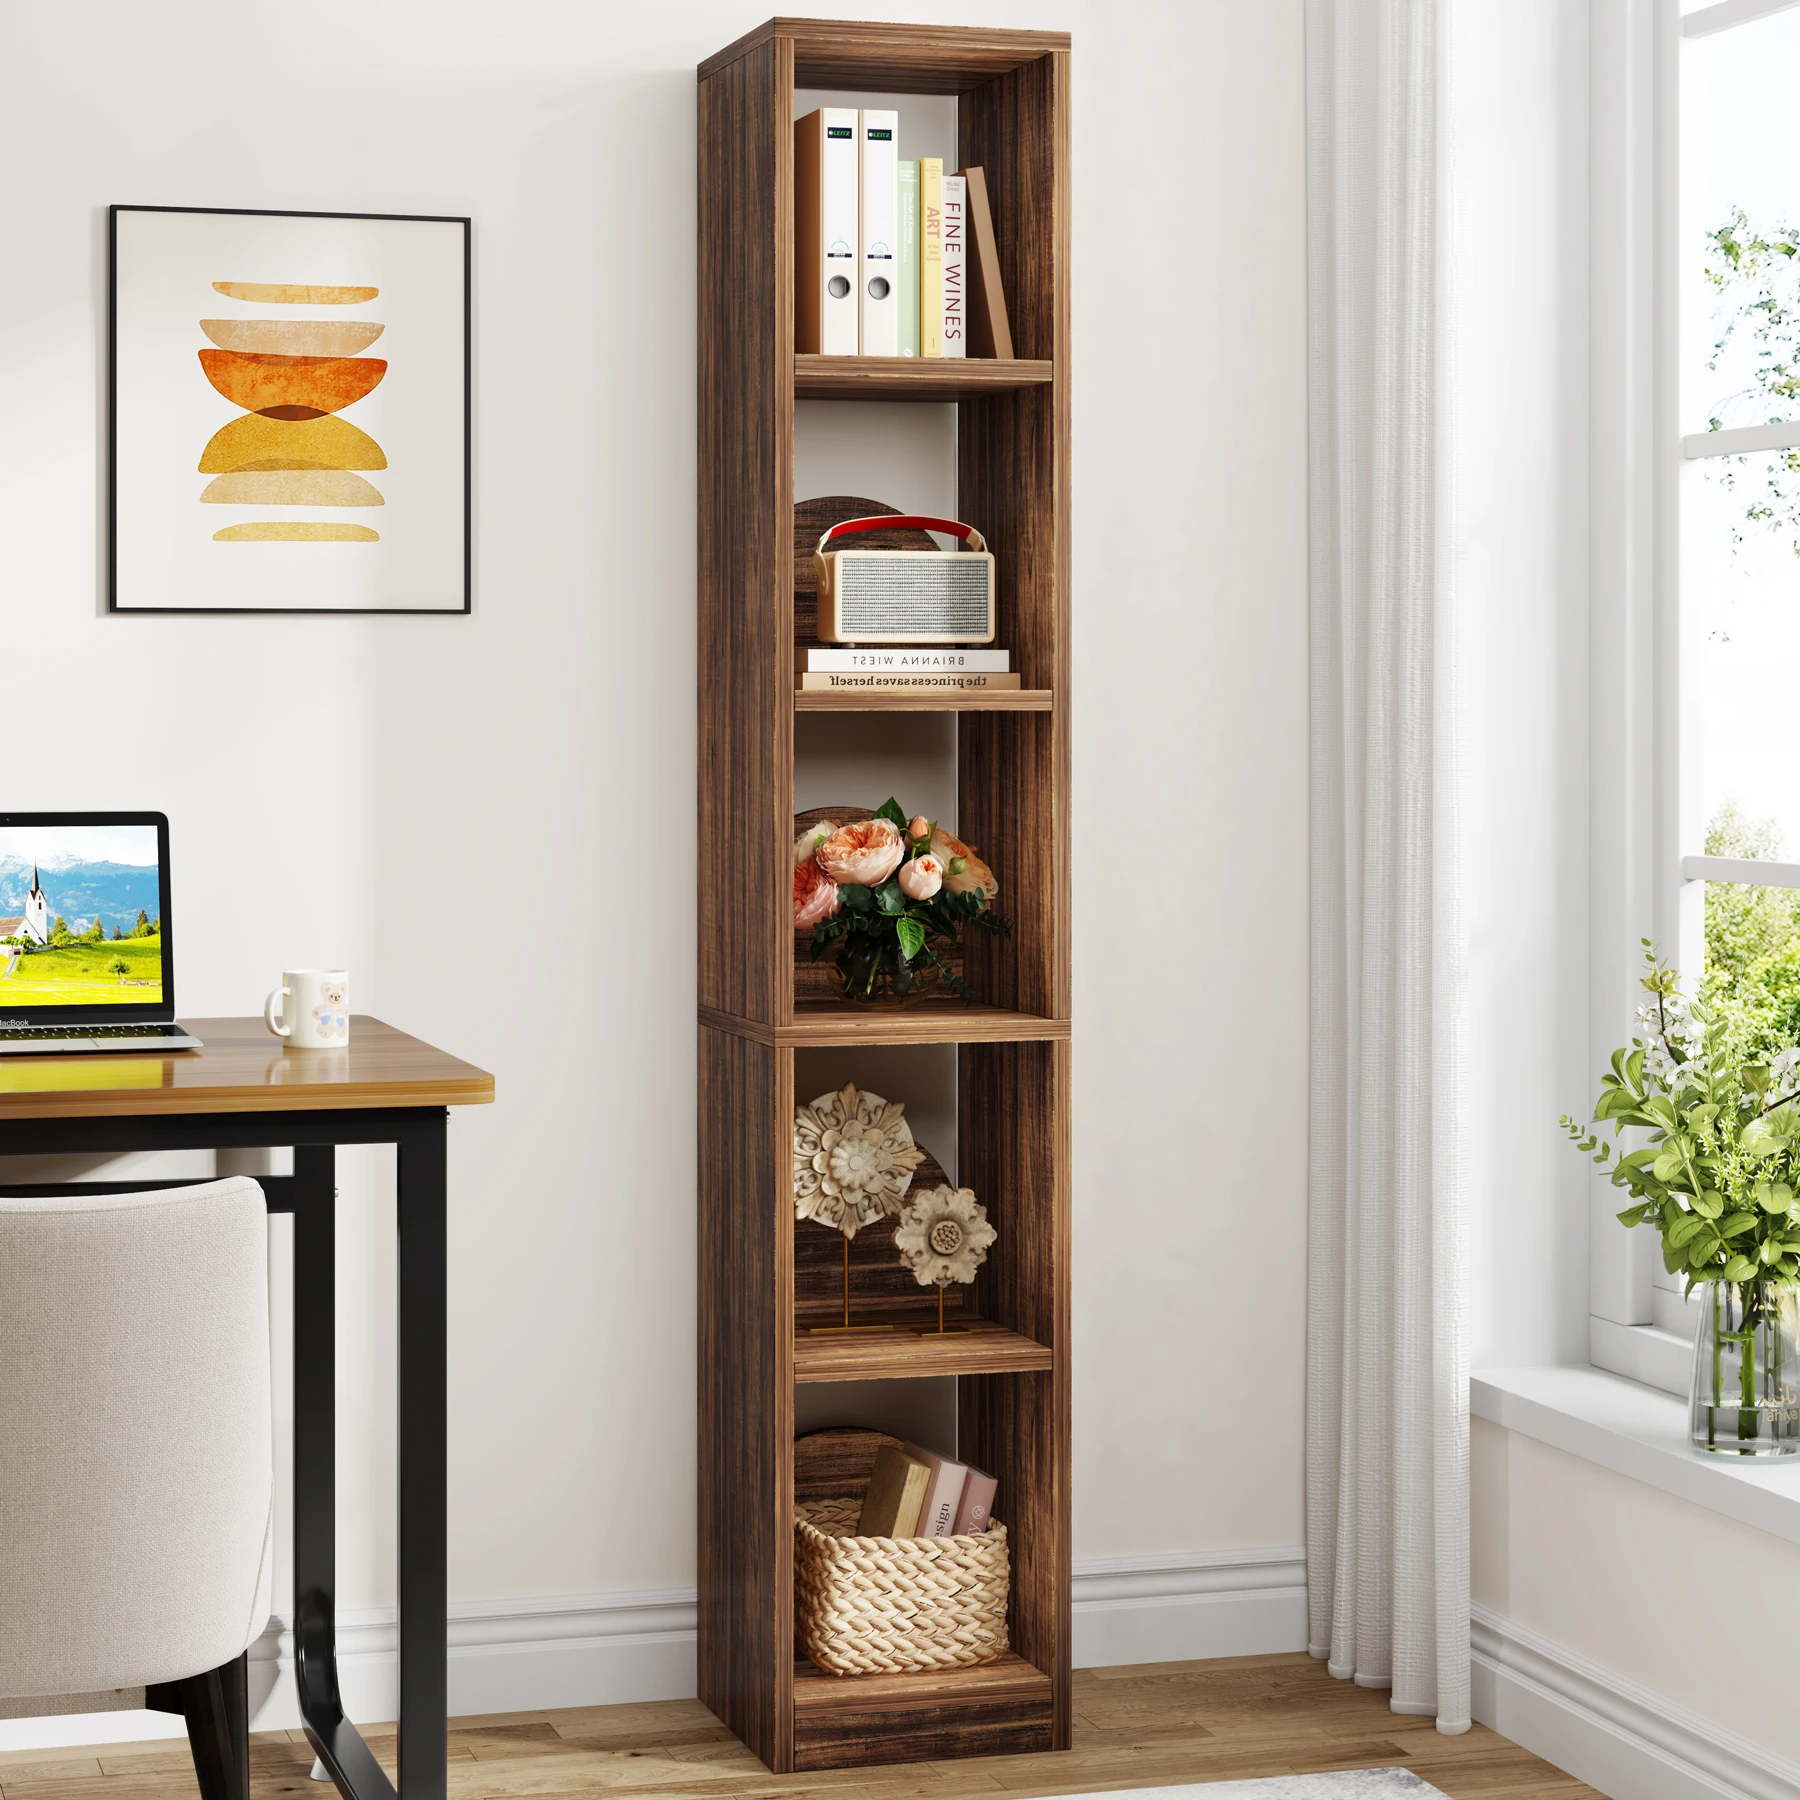 

Tribesigns Narrow Bookcase, 5-Tier Tall Industrial Corner Bookshelf Display Shelf, Skinny Wood Bookshelves and Bookcases